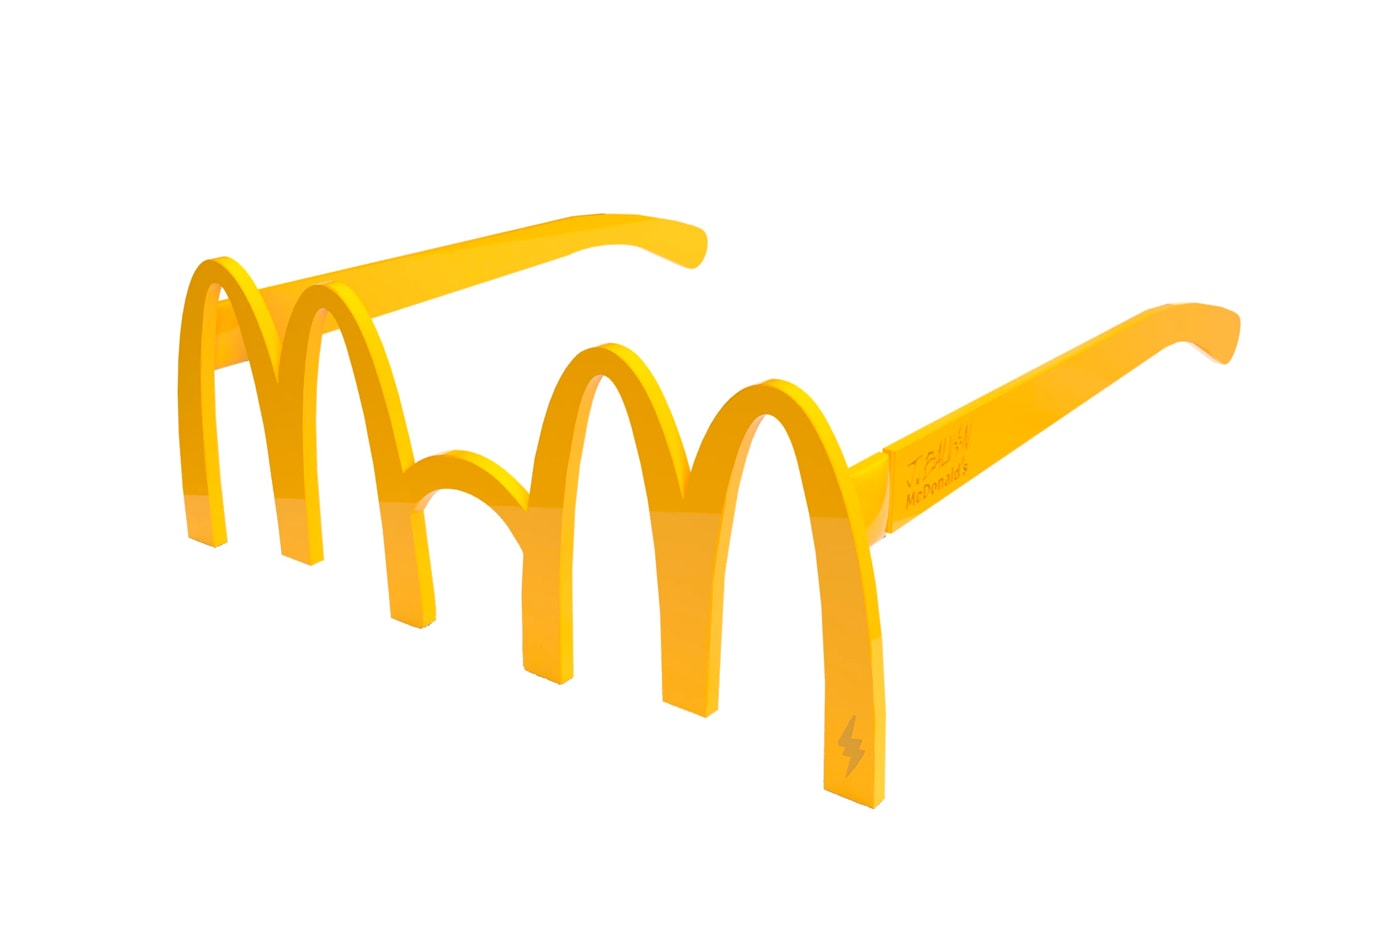 J Balvin x McDonald's 全新聯乘系列正式發佈